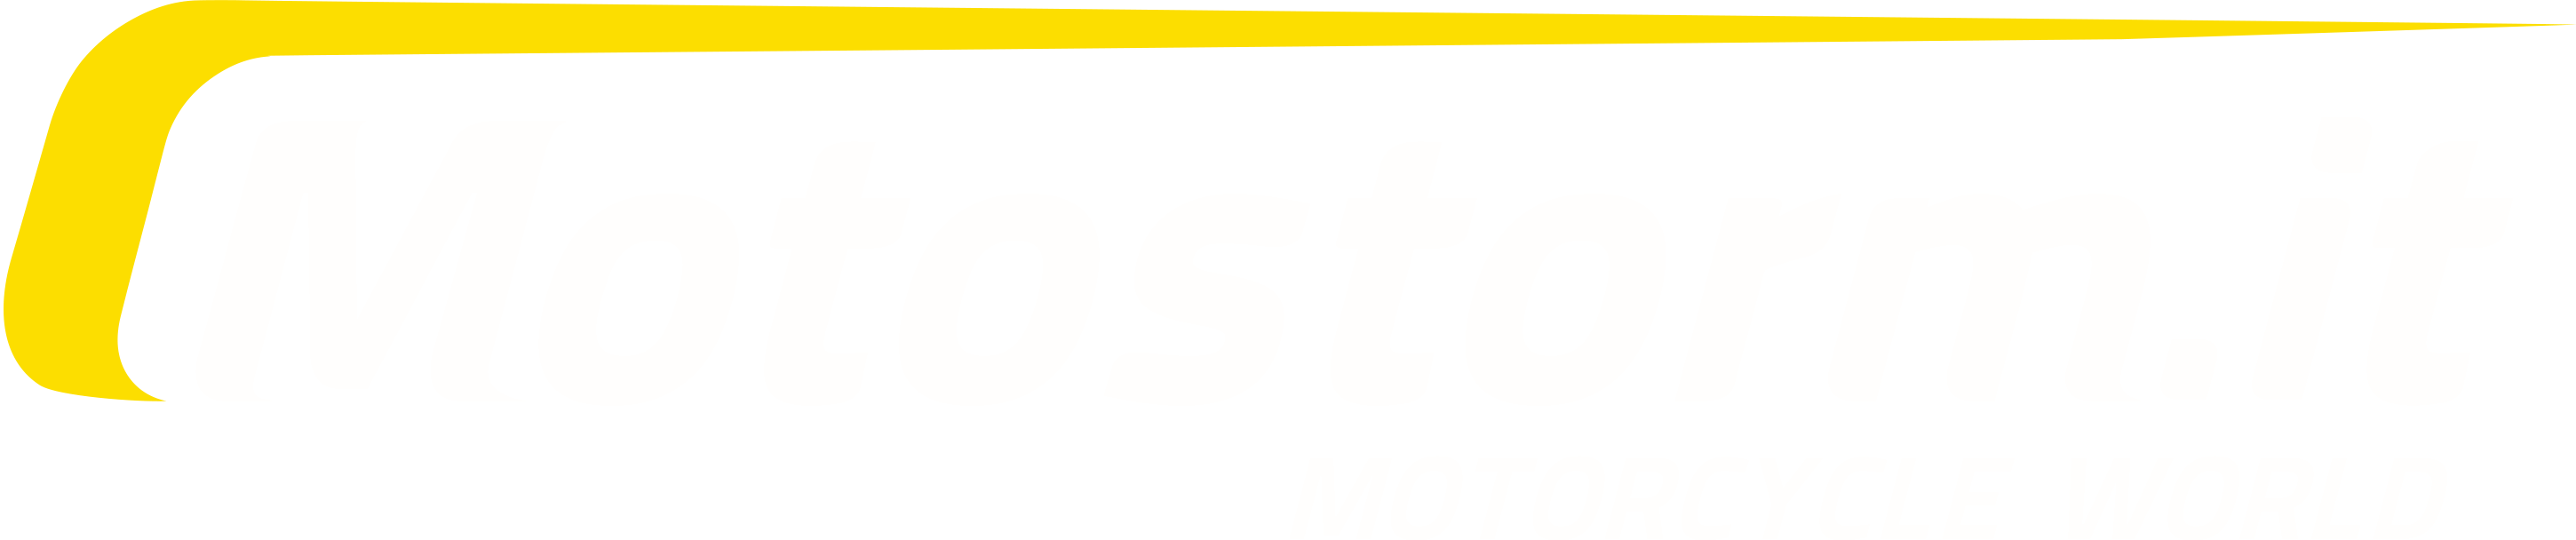 logo_motostorm_white